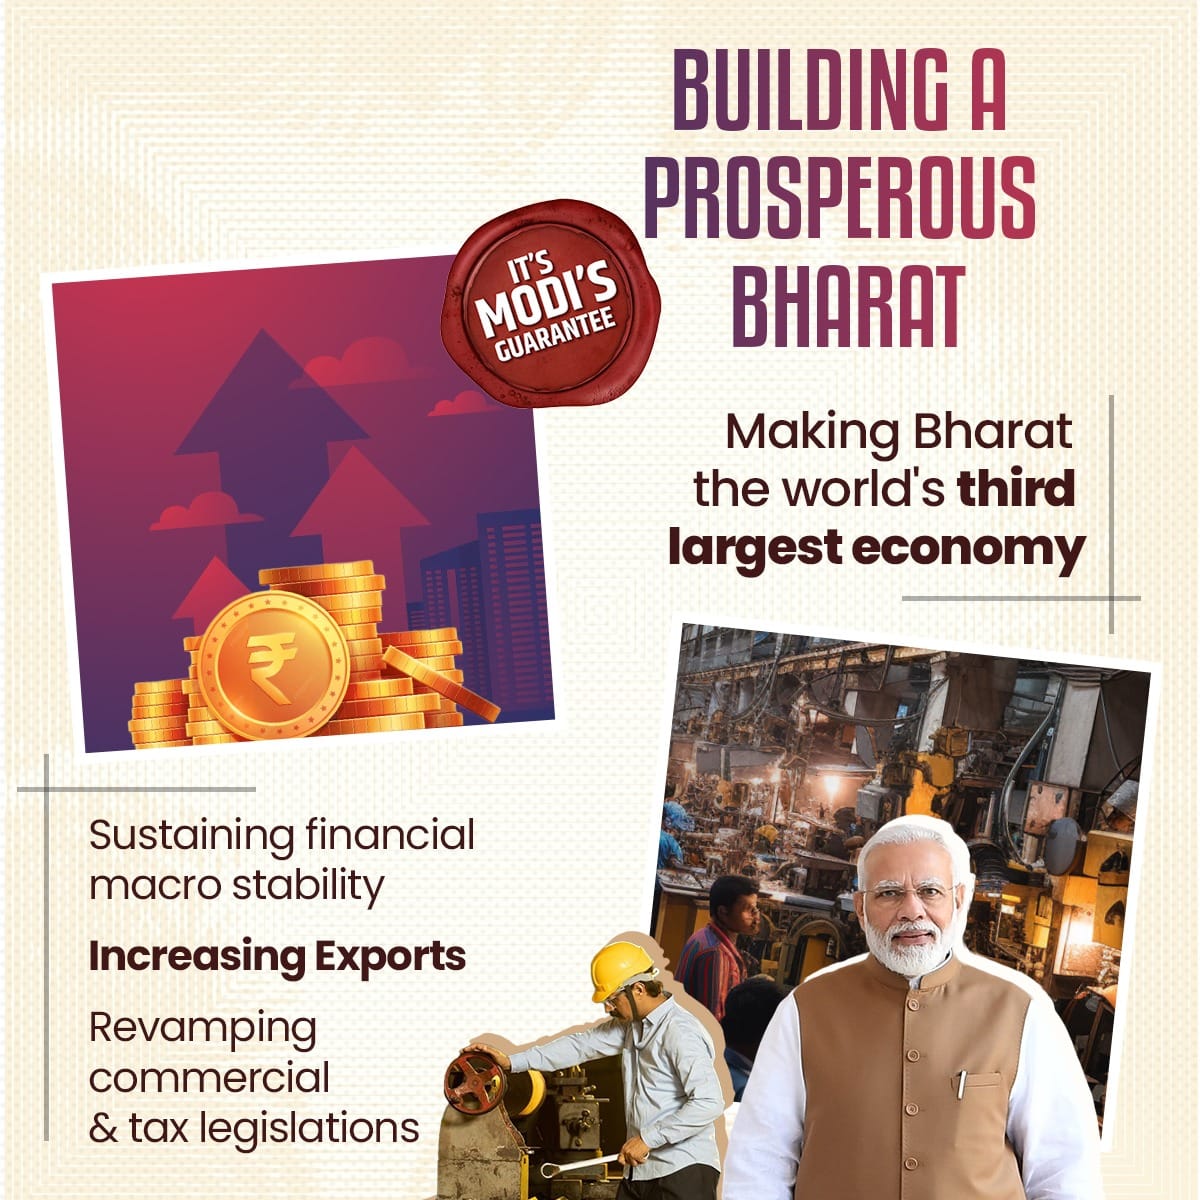 Building a Prosperous Bharat! #ModiKiGuarantee #PhirEkBaarModiSarkar